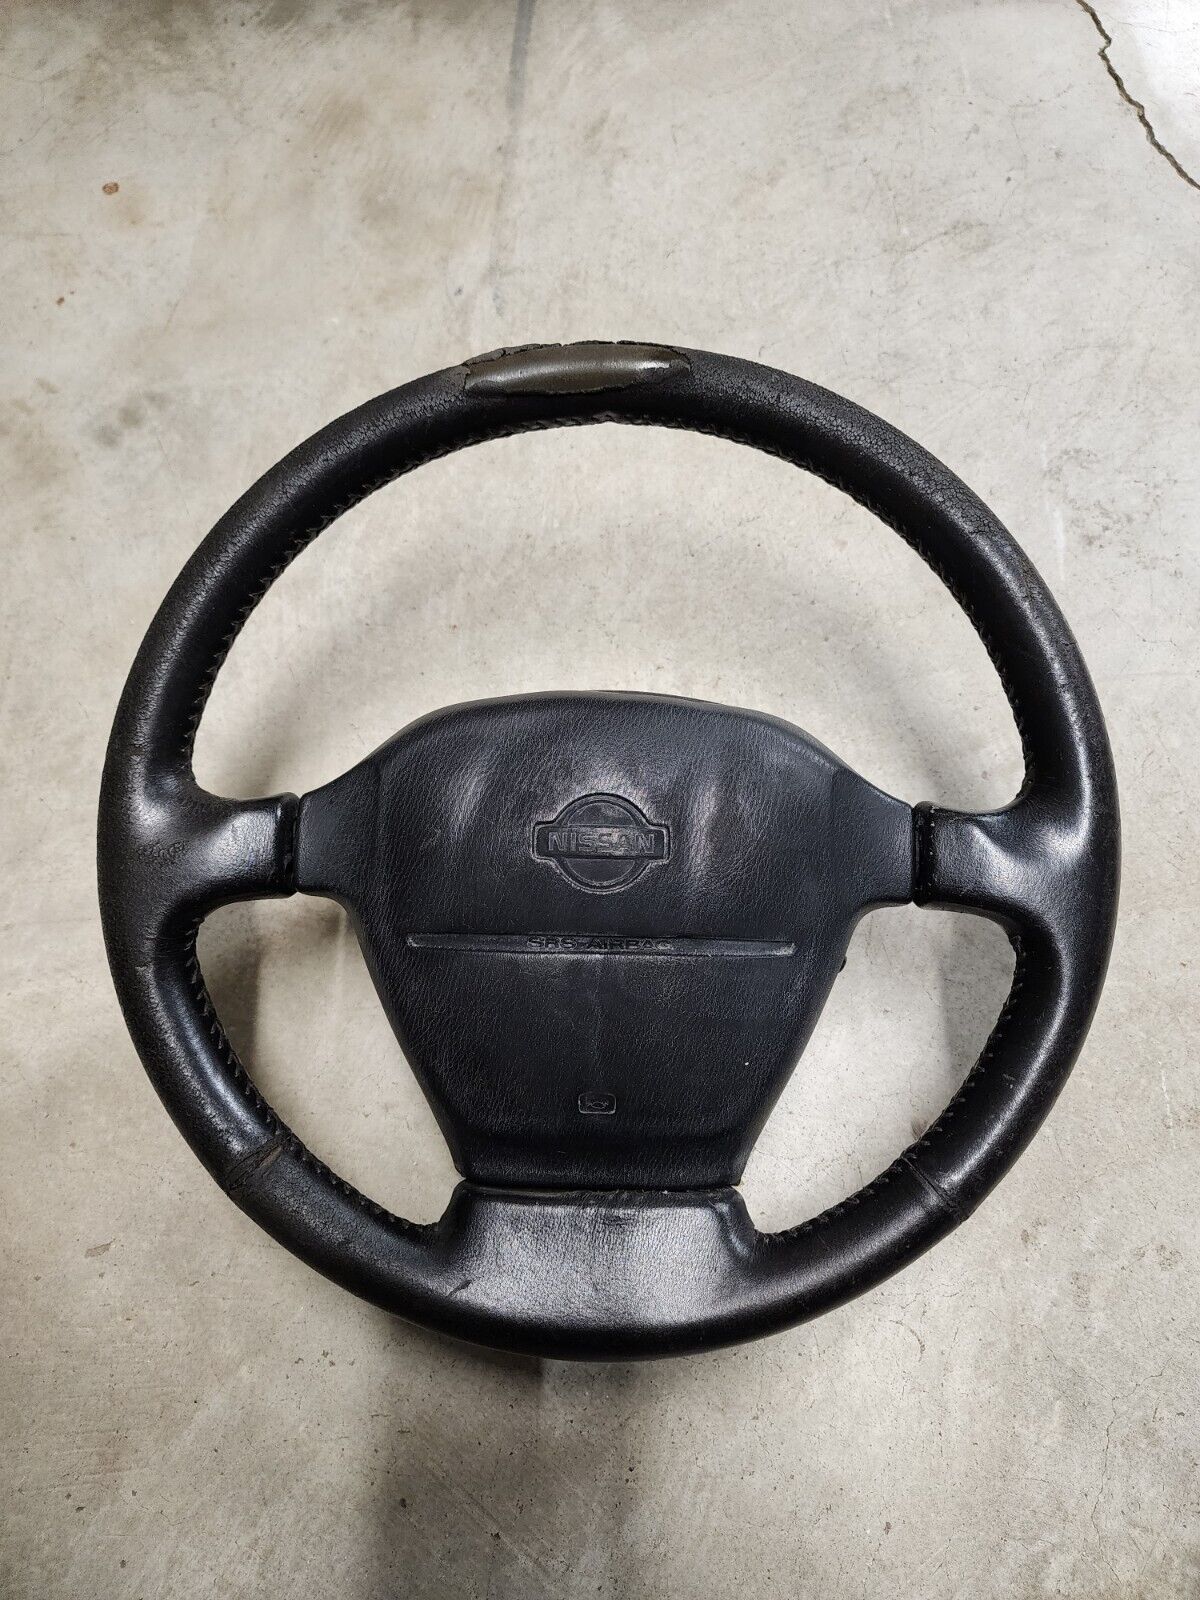 95-98 Nissan S14 240sx OEM steering wheel leather black factory original stock